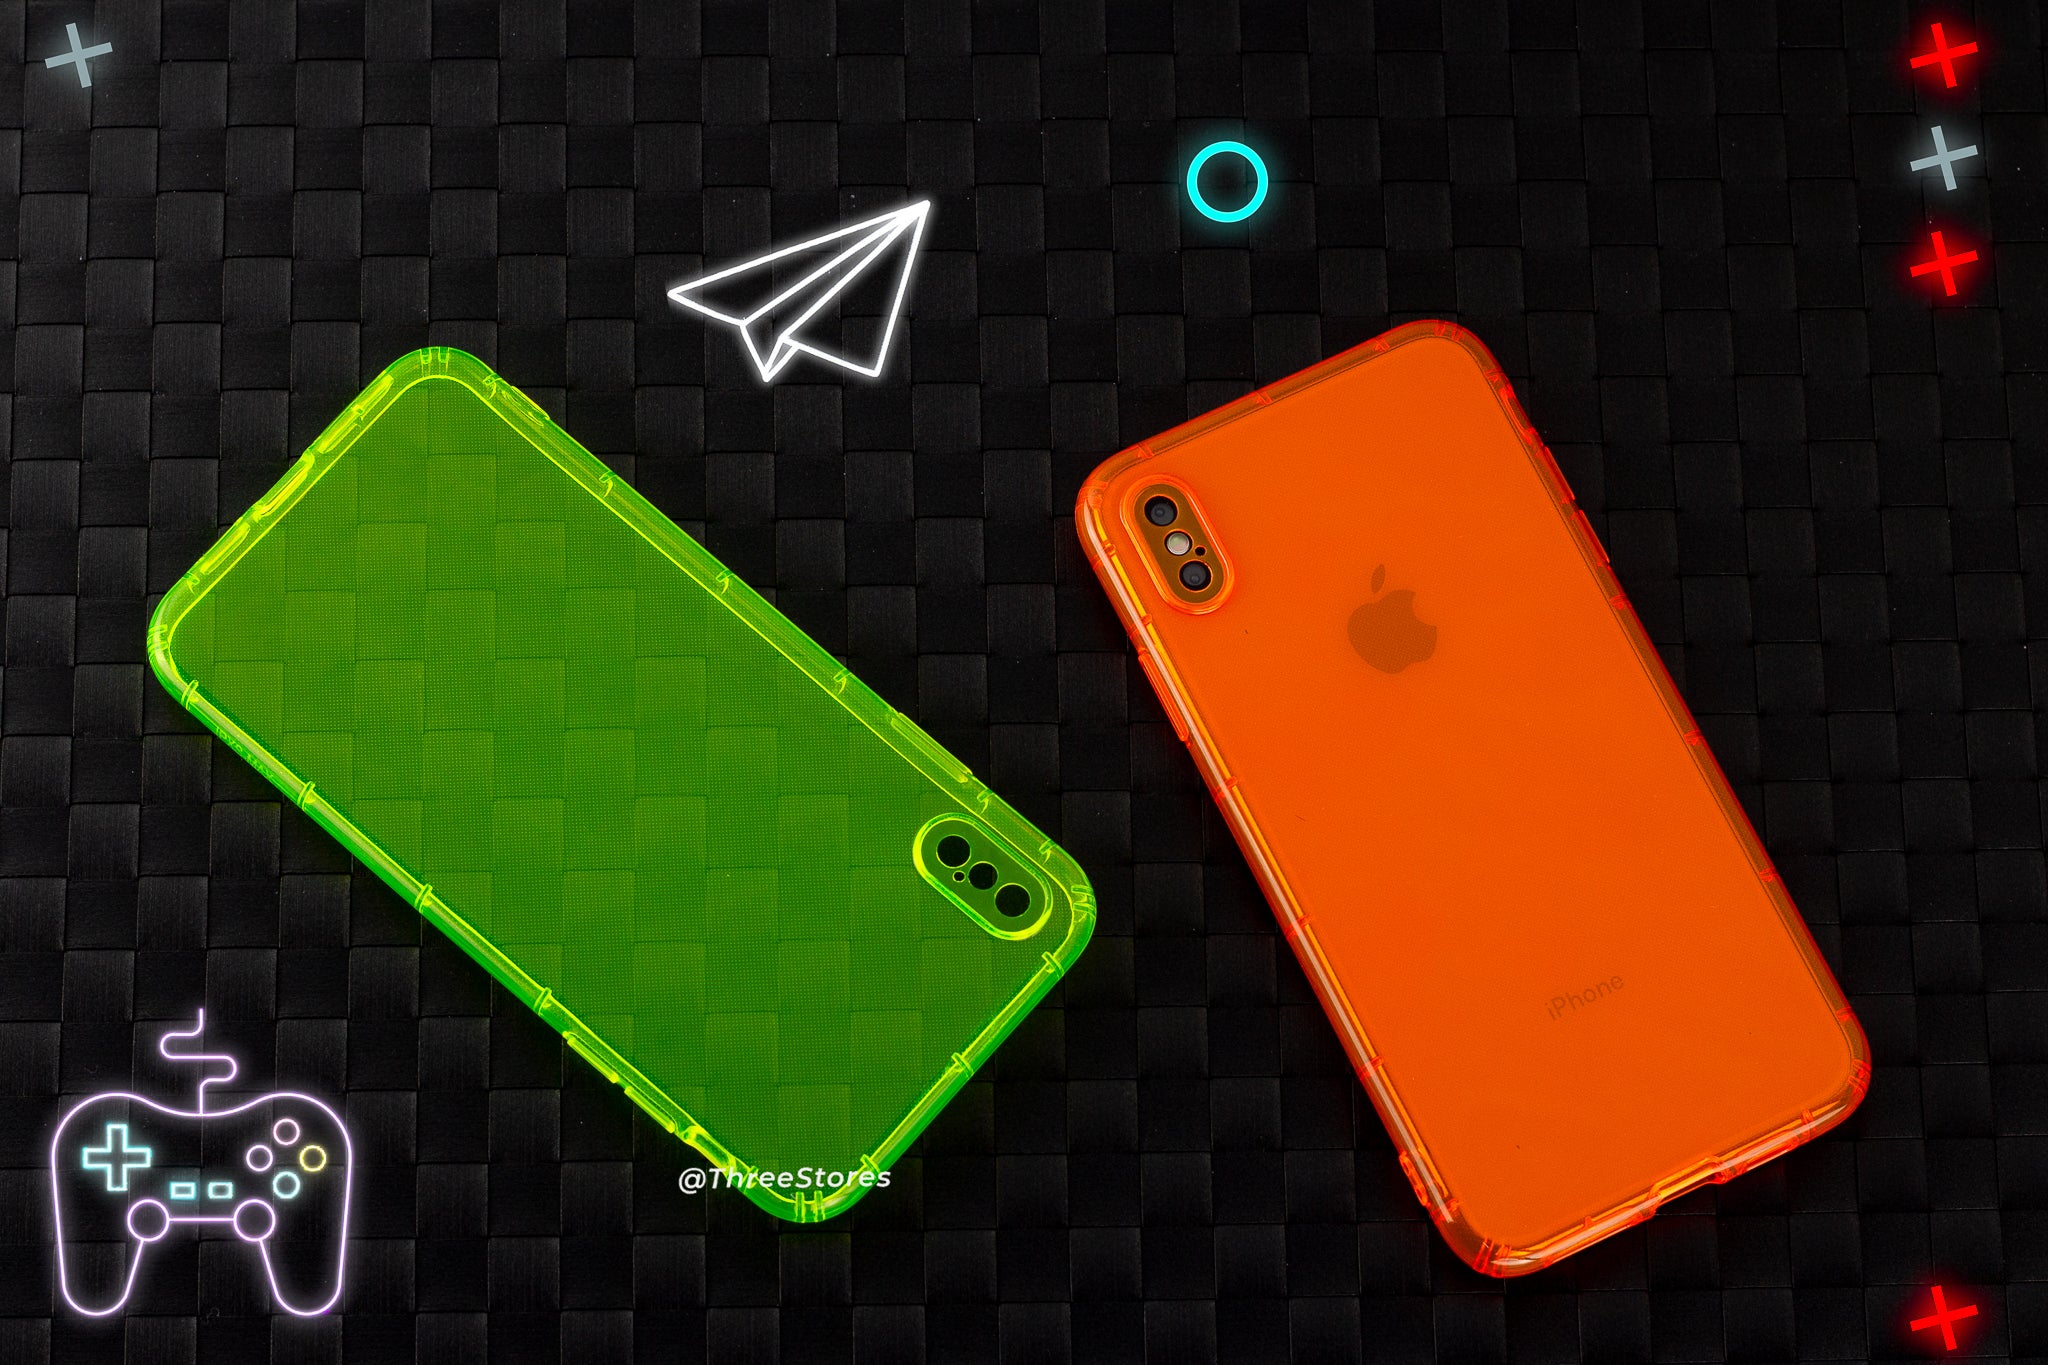 Q series Neon Fluorescent Case iPhone X Max